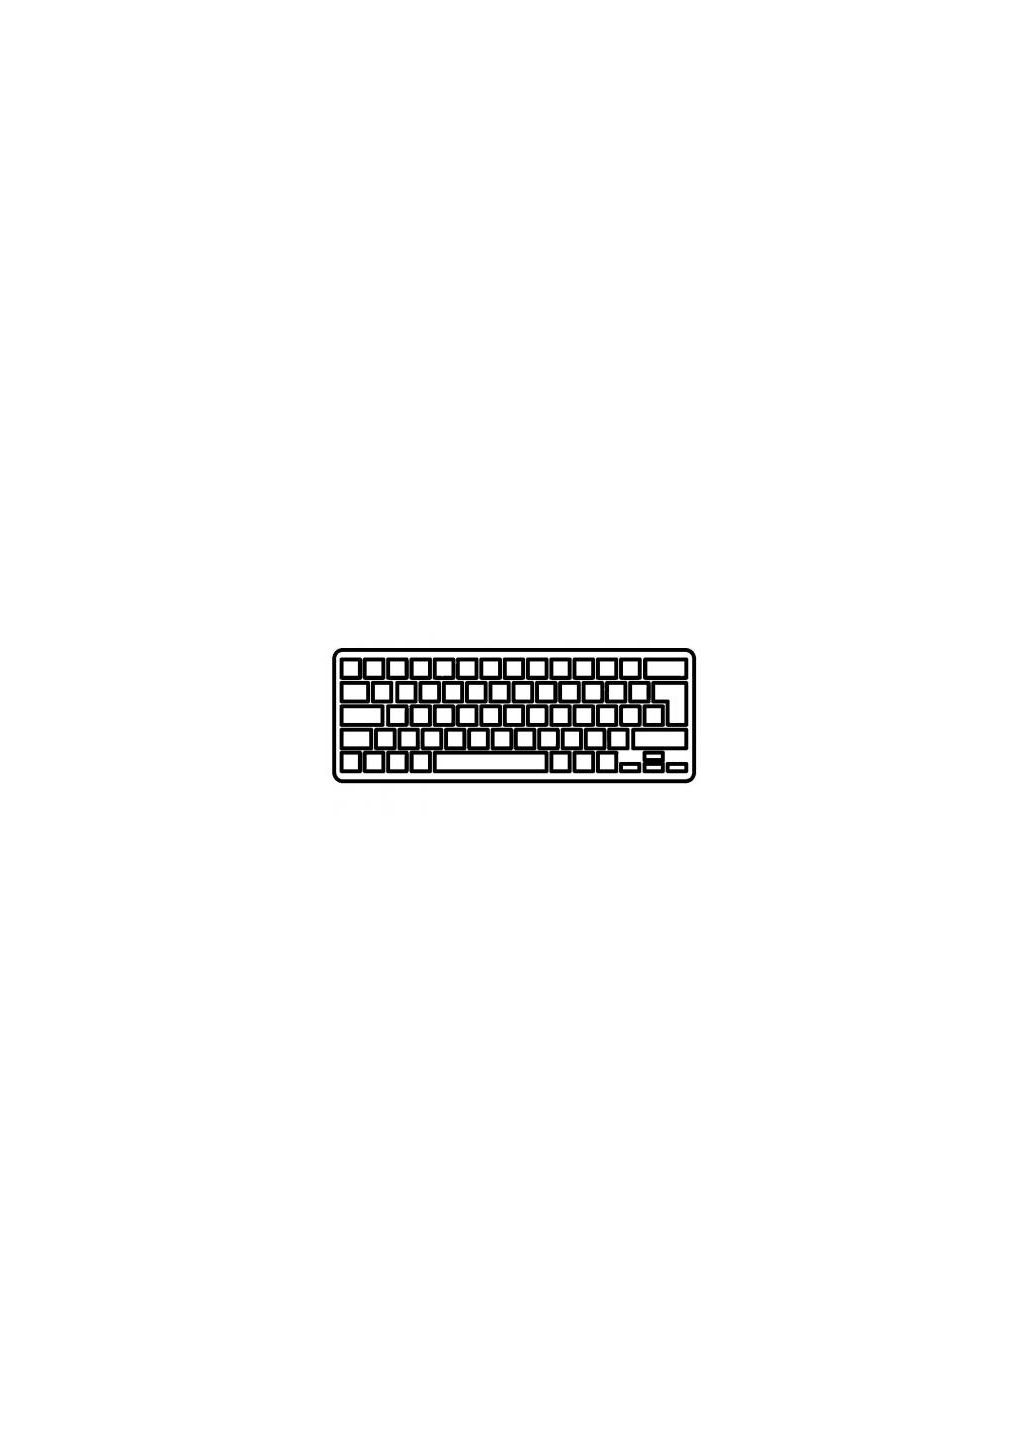 Клавиатура ноутбука Mini 2103000 Series черная RU (A43053) HP mini 210-3000 series черная ru (276706756)